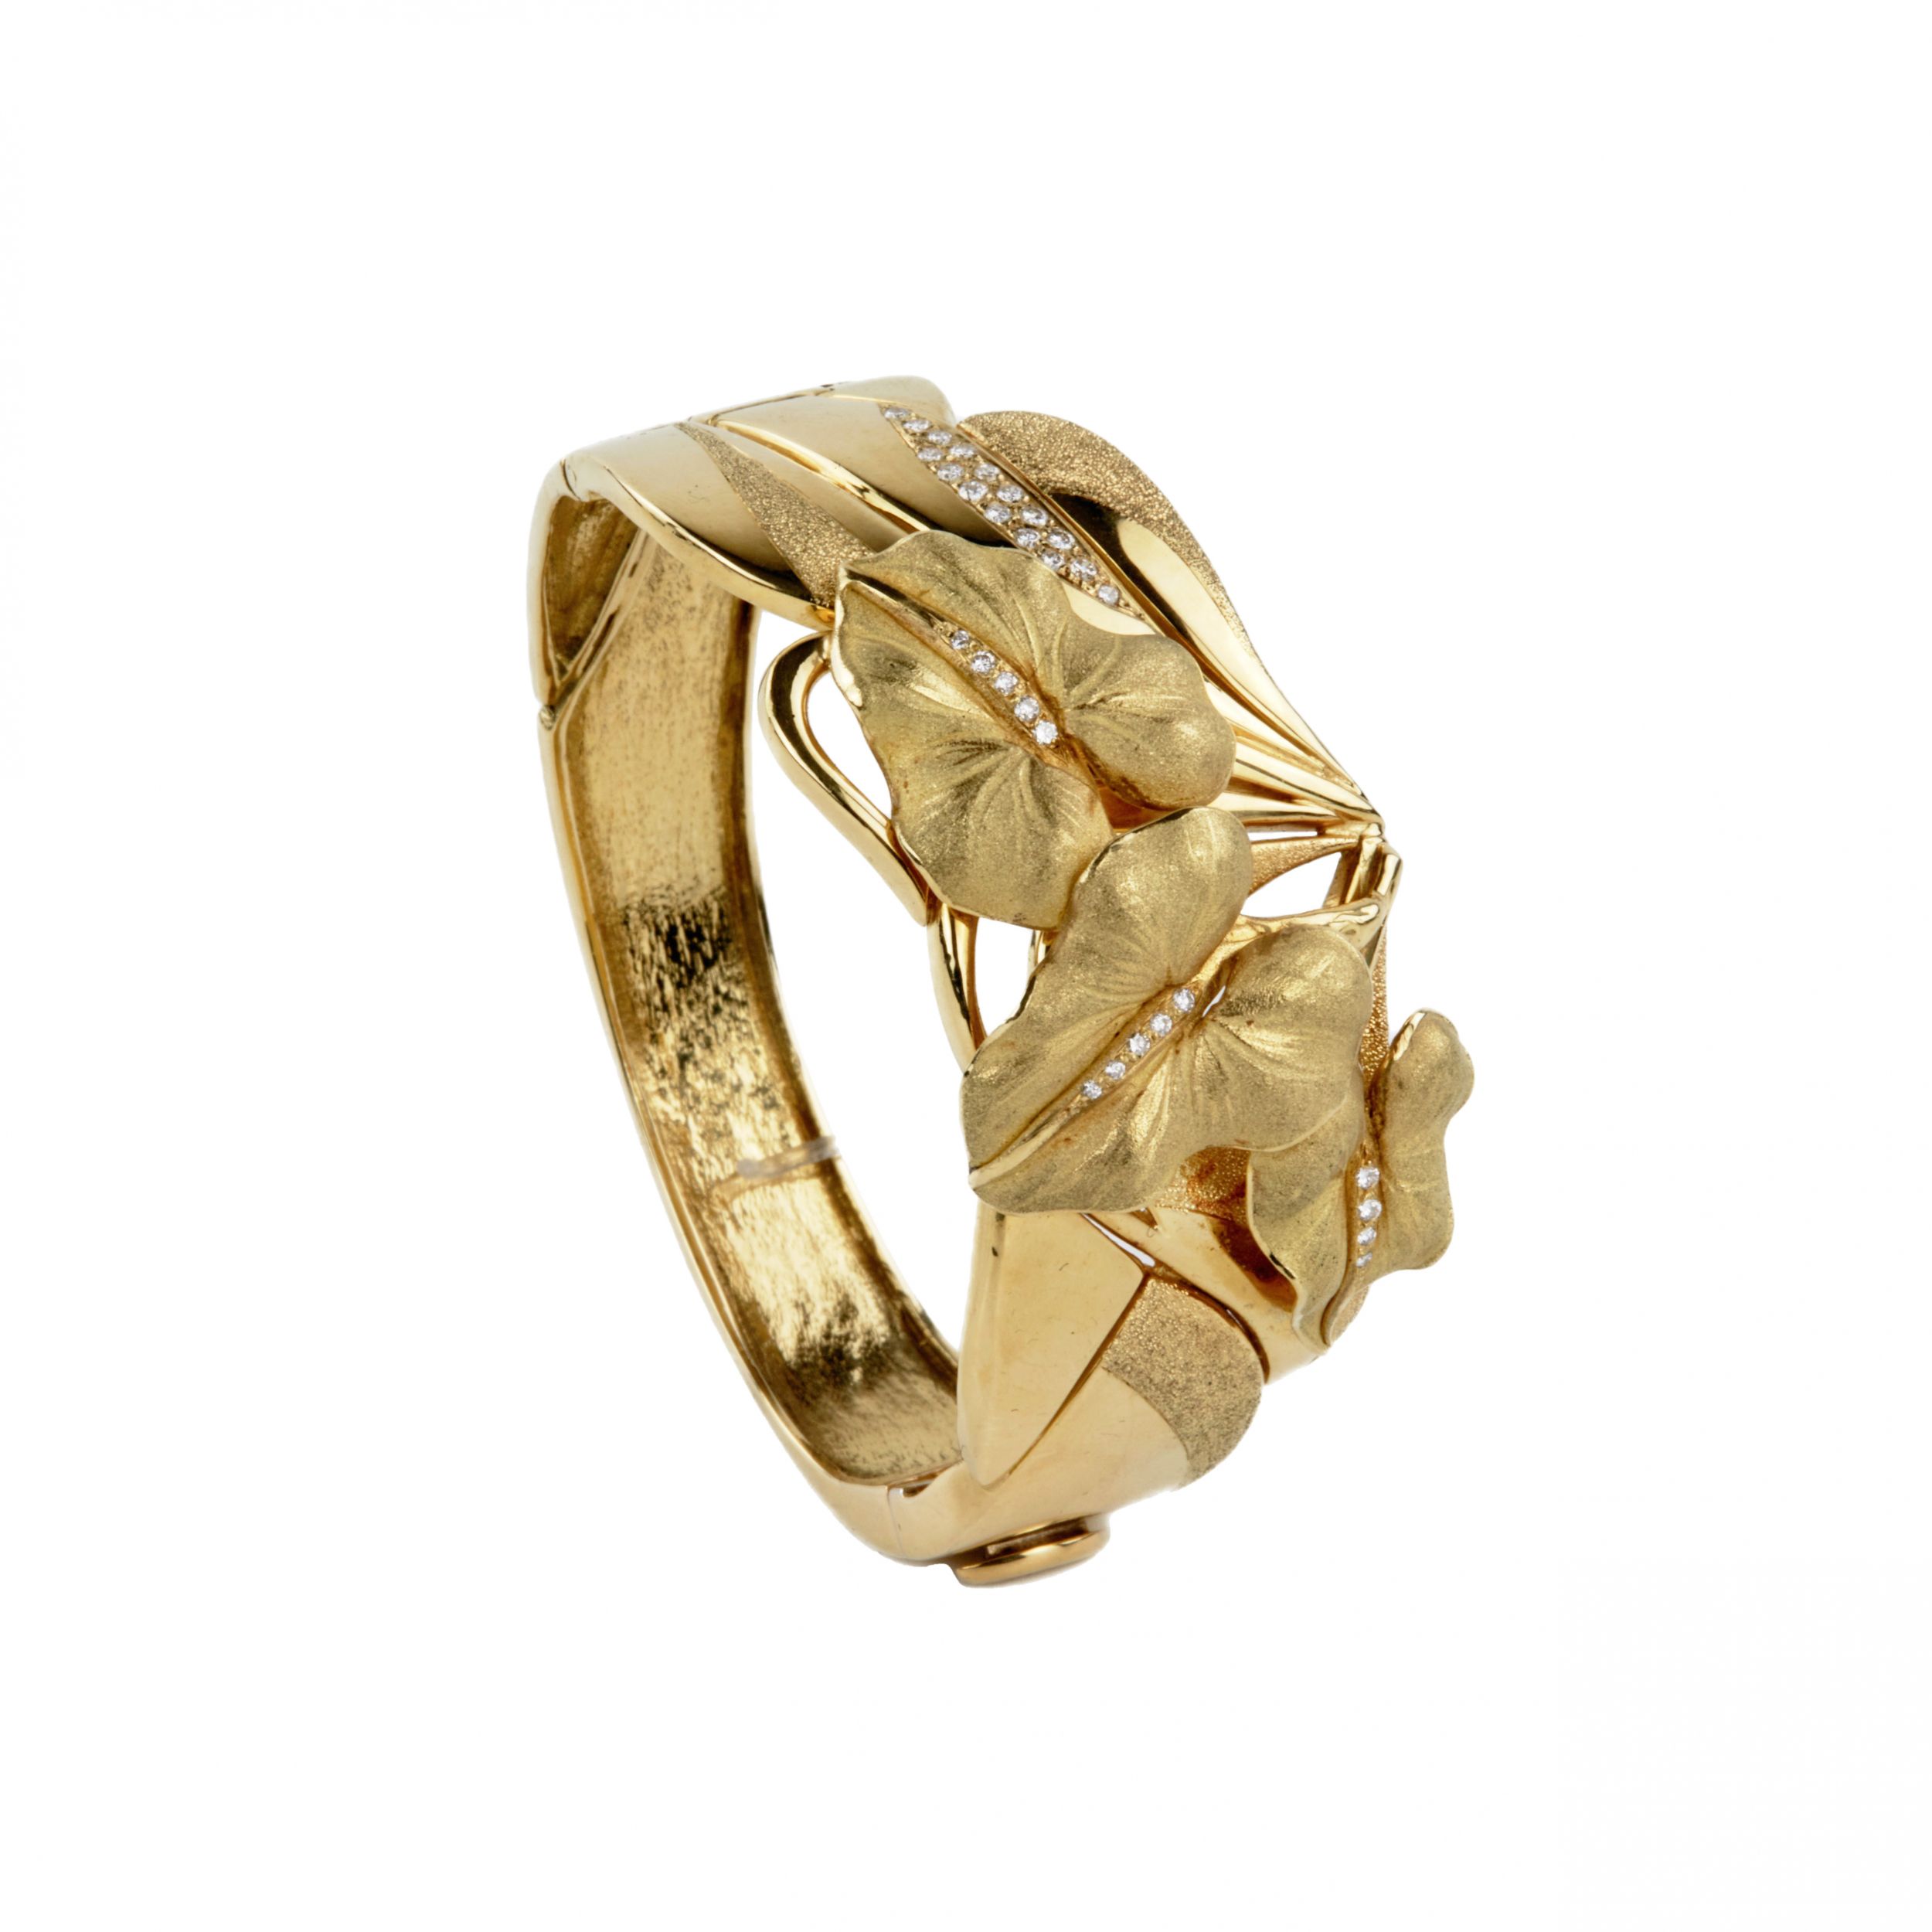 Gold-bracelet-with-leaf-motif-and-diamonds-